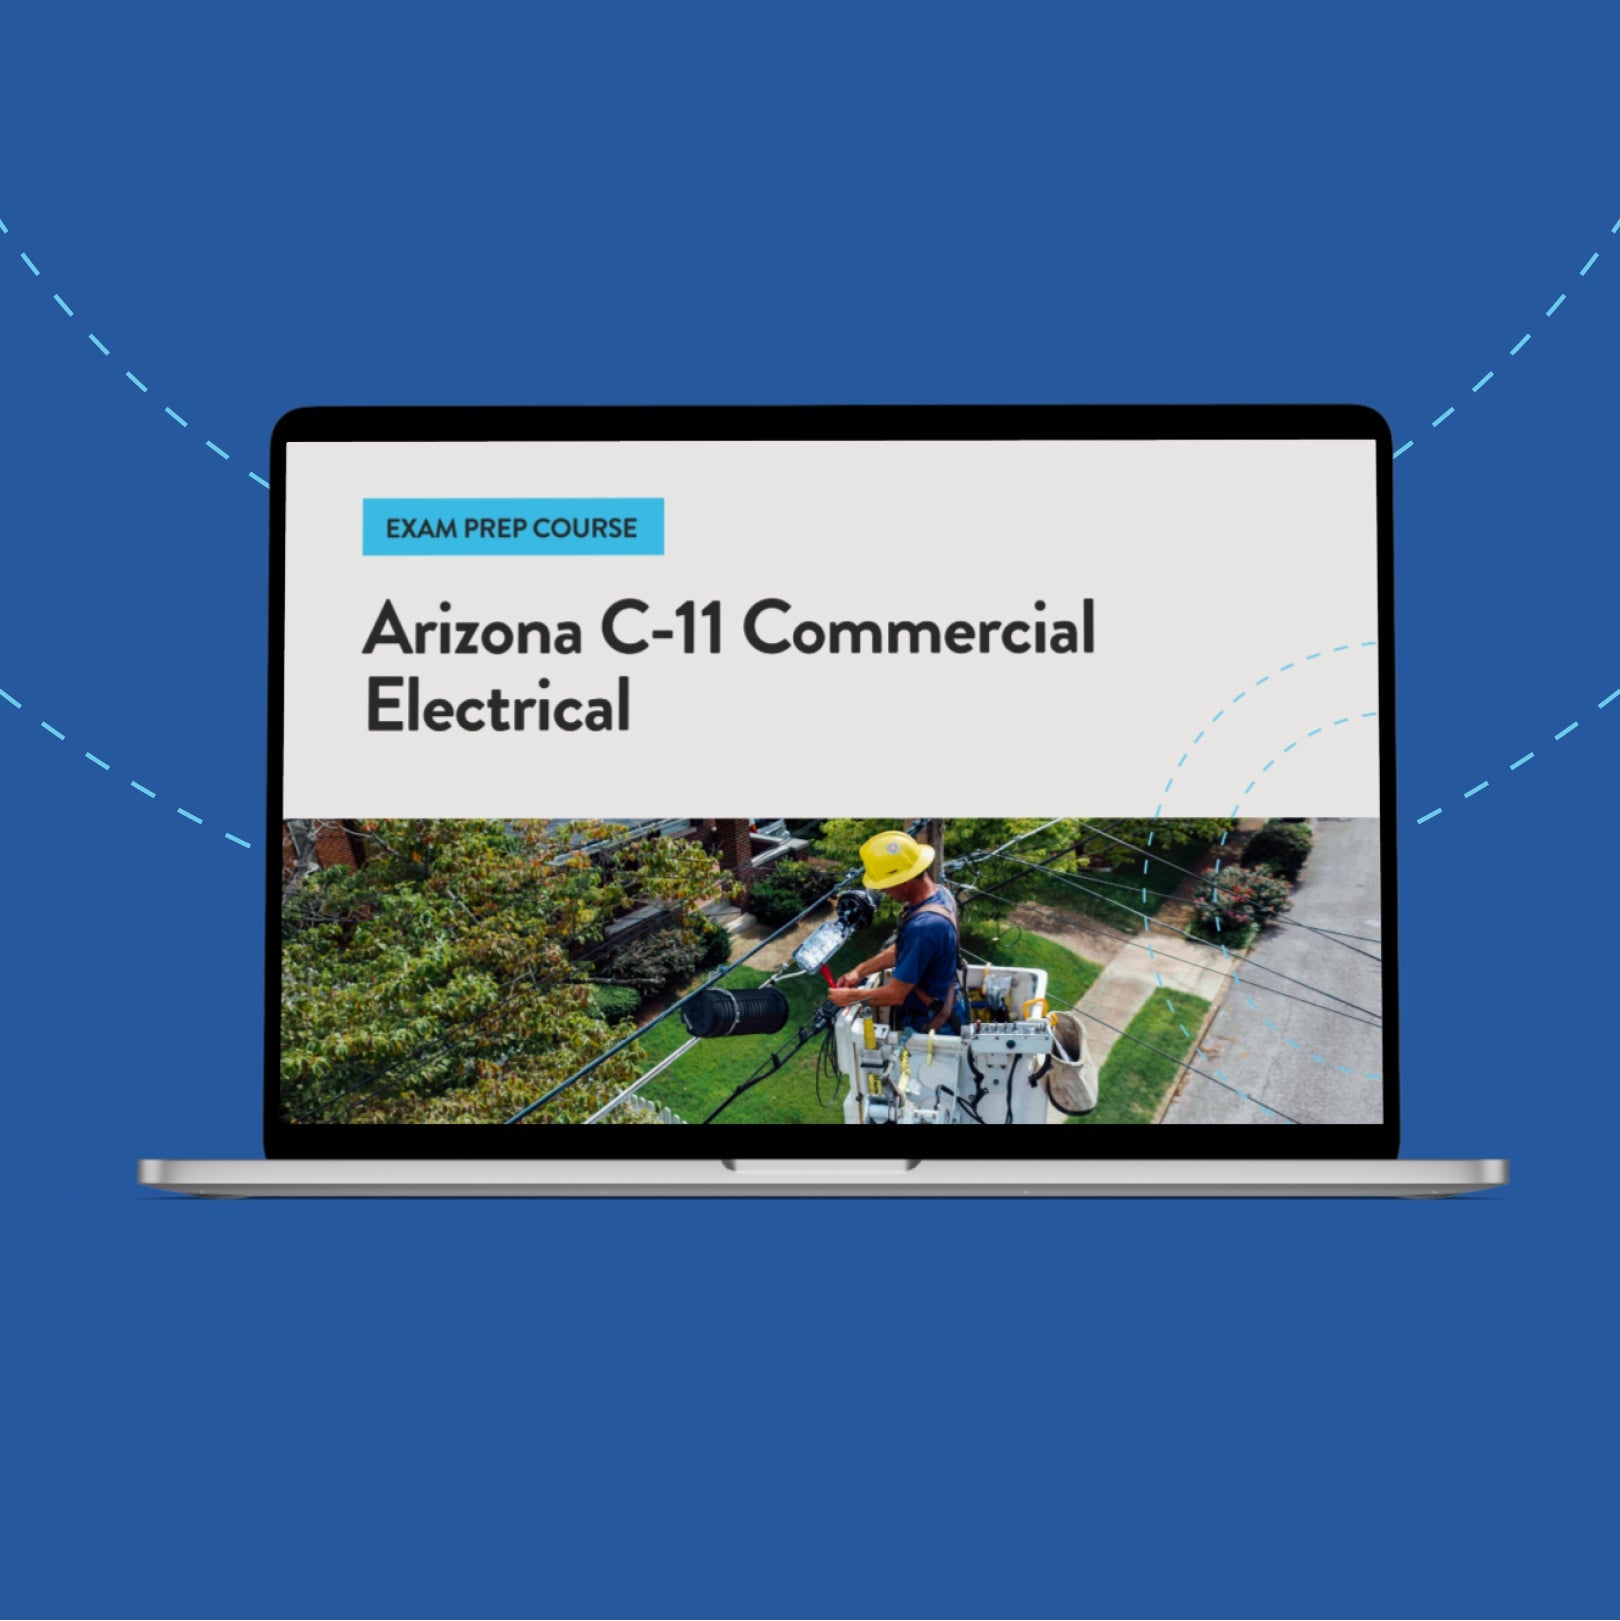 Arizona C-11 Commercial Electrical Exam Prep Course